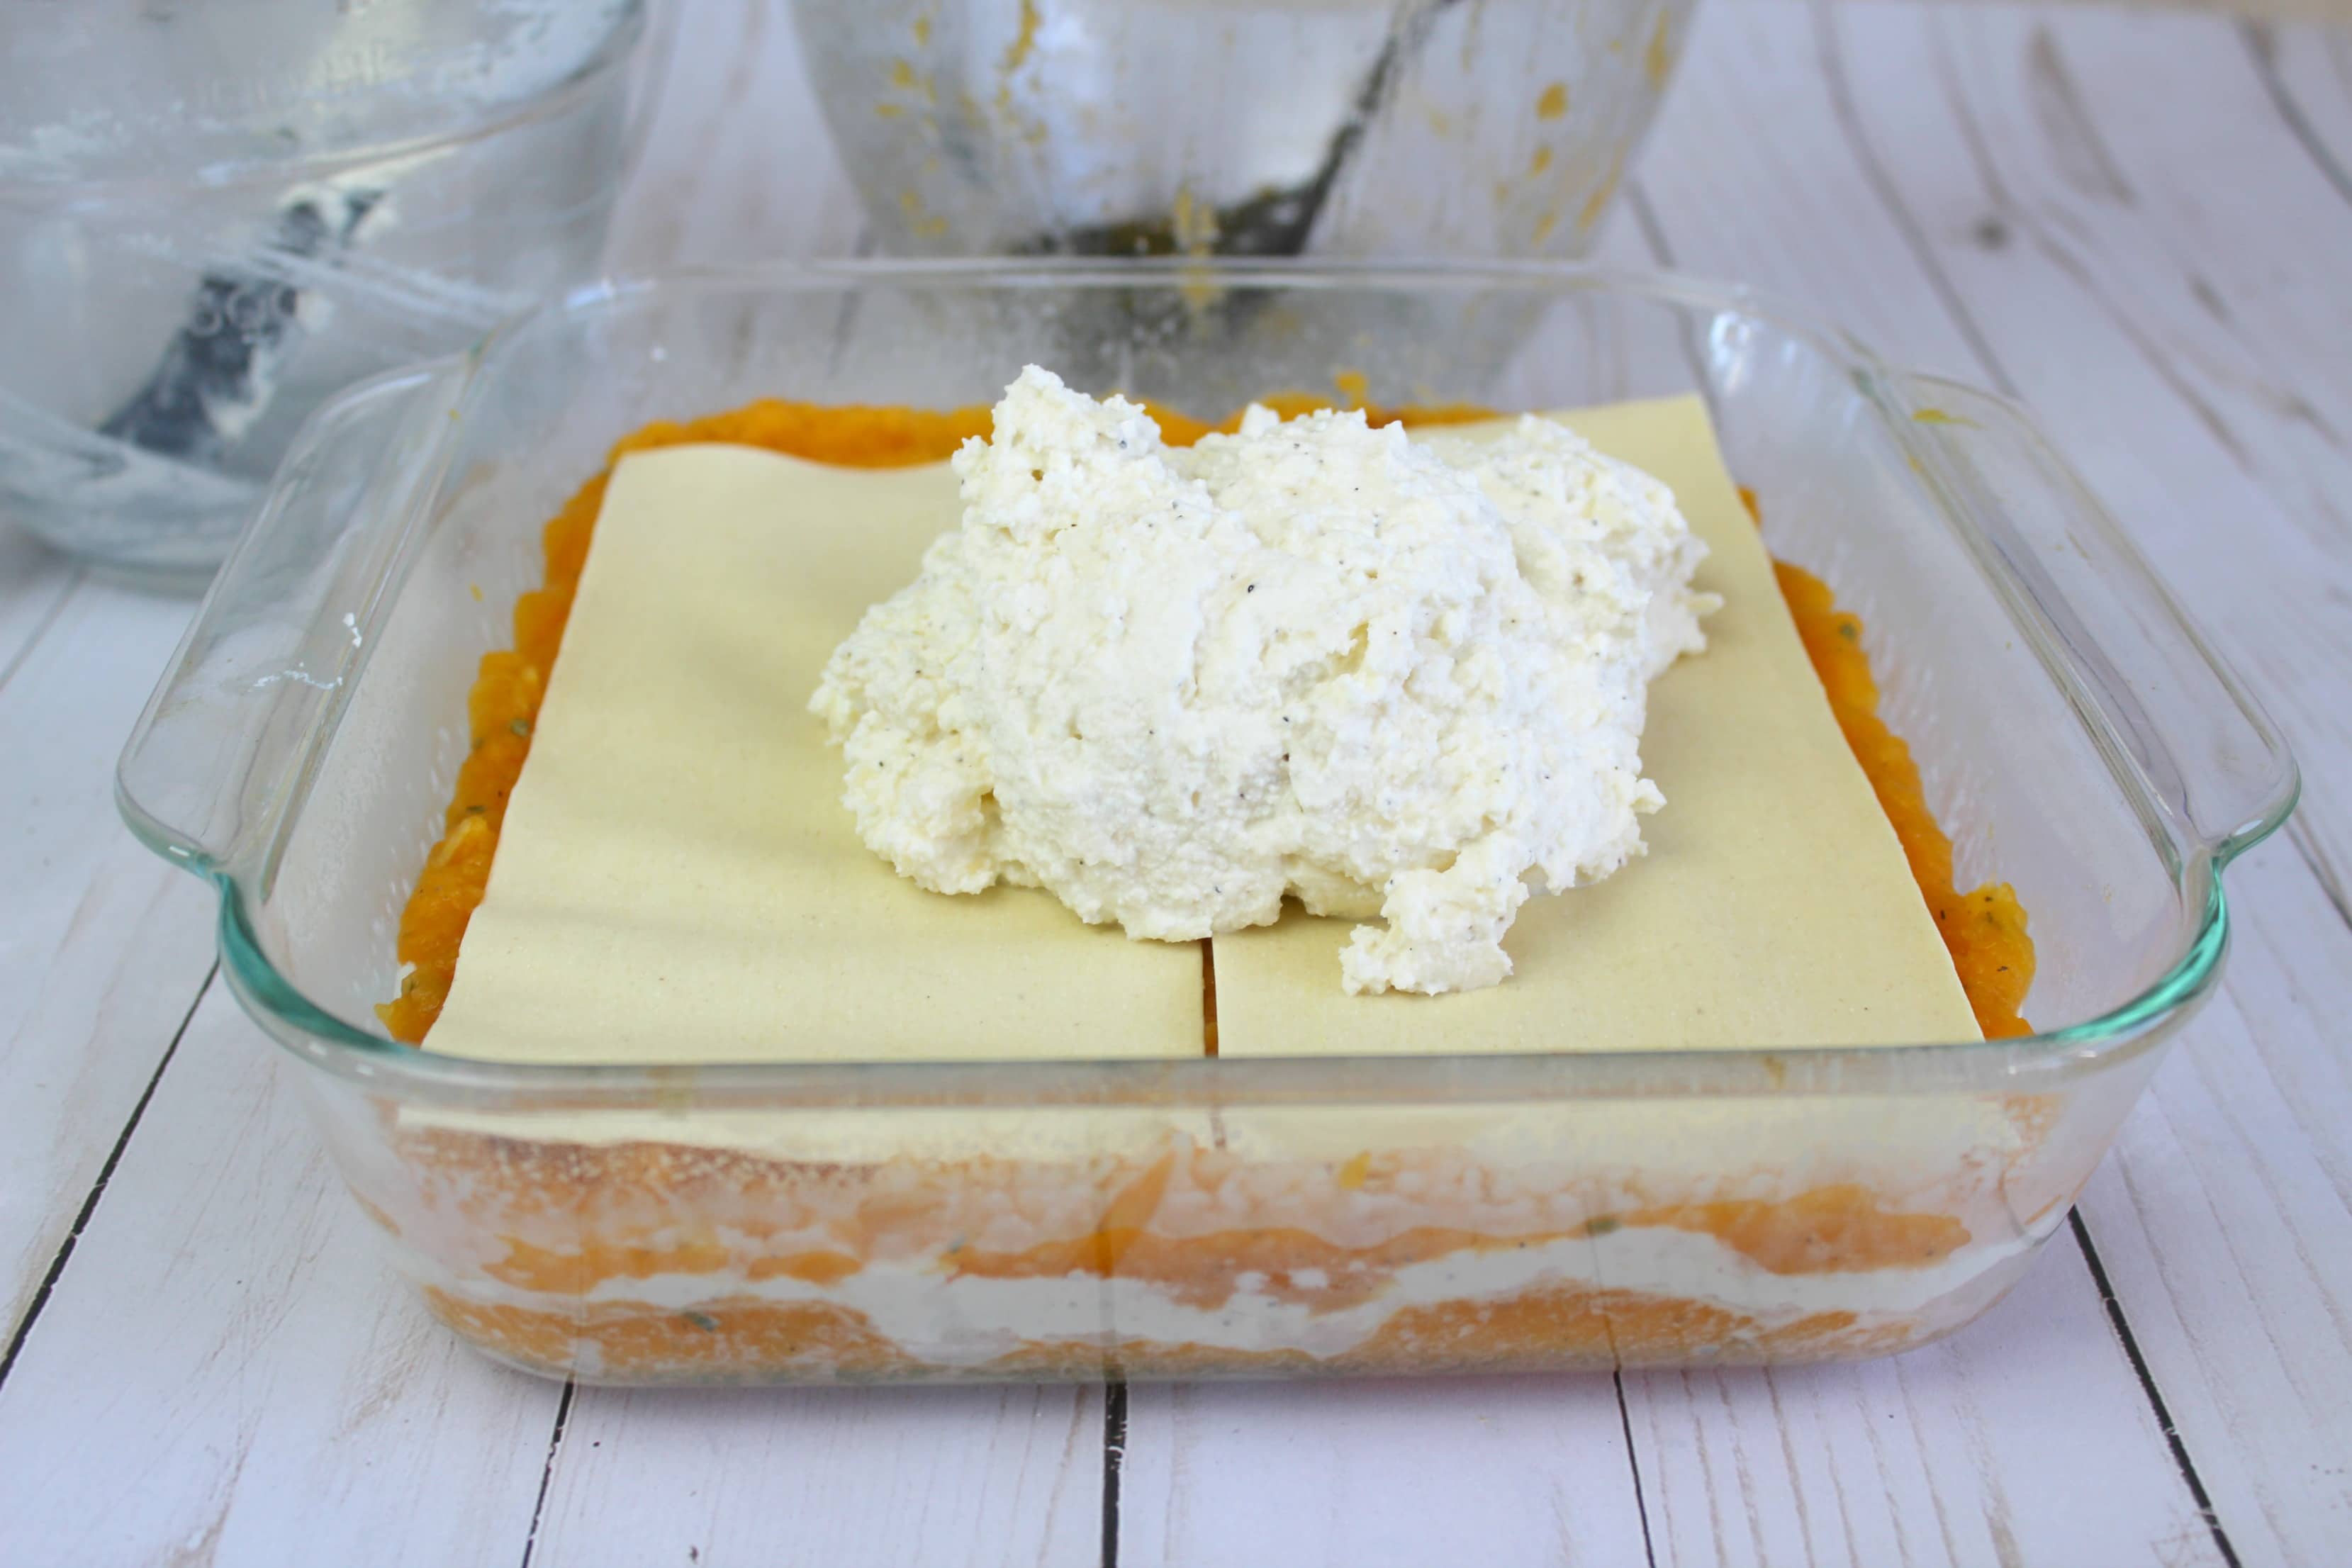 Assemble the lasagna, alternating between pasta sheets, squash mixture, and cheese spread. 